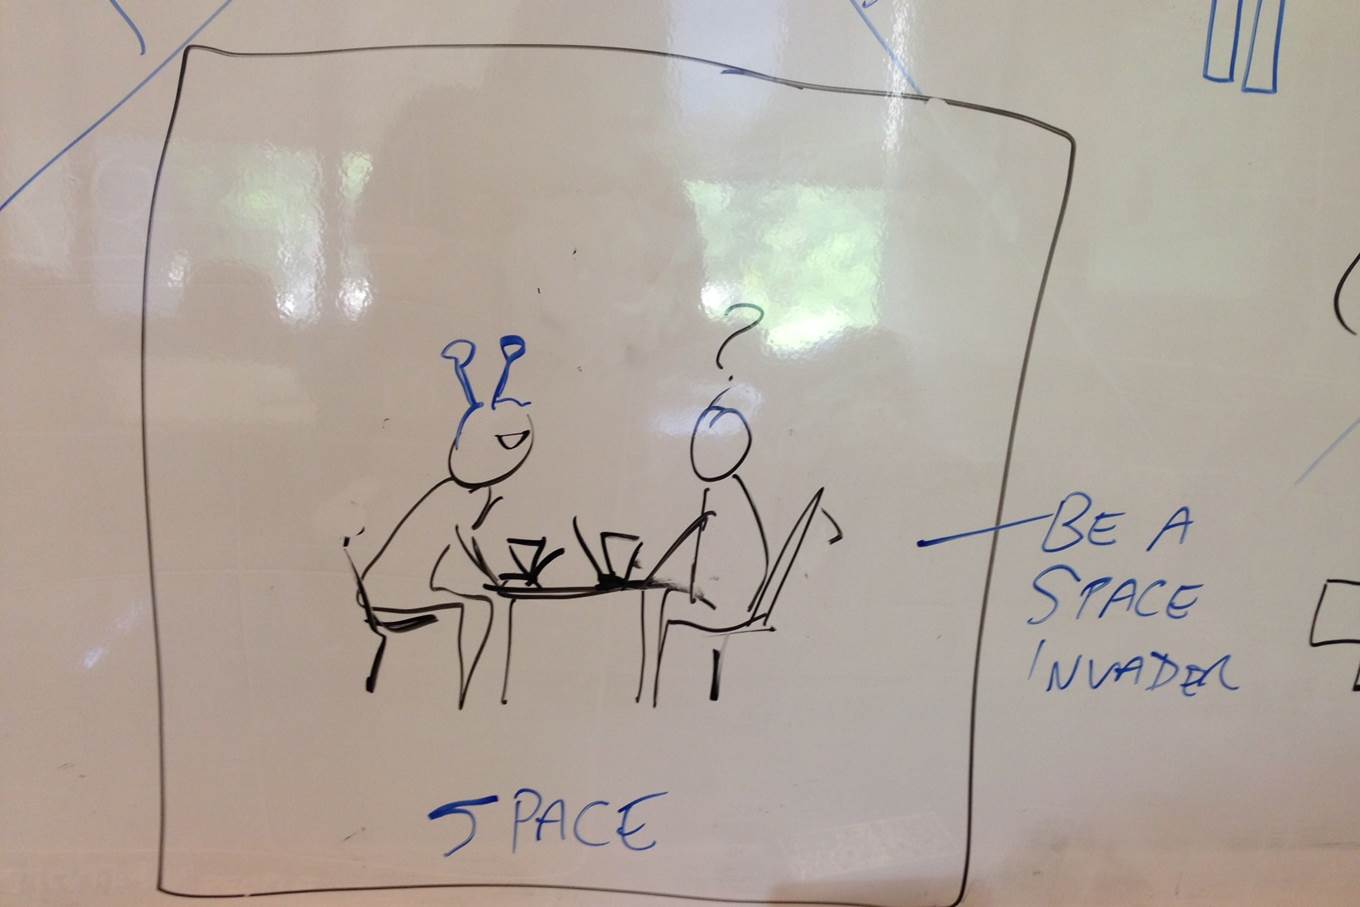 Brainstorming "space" whiteboard design